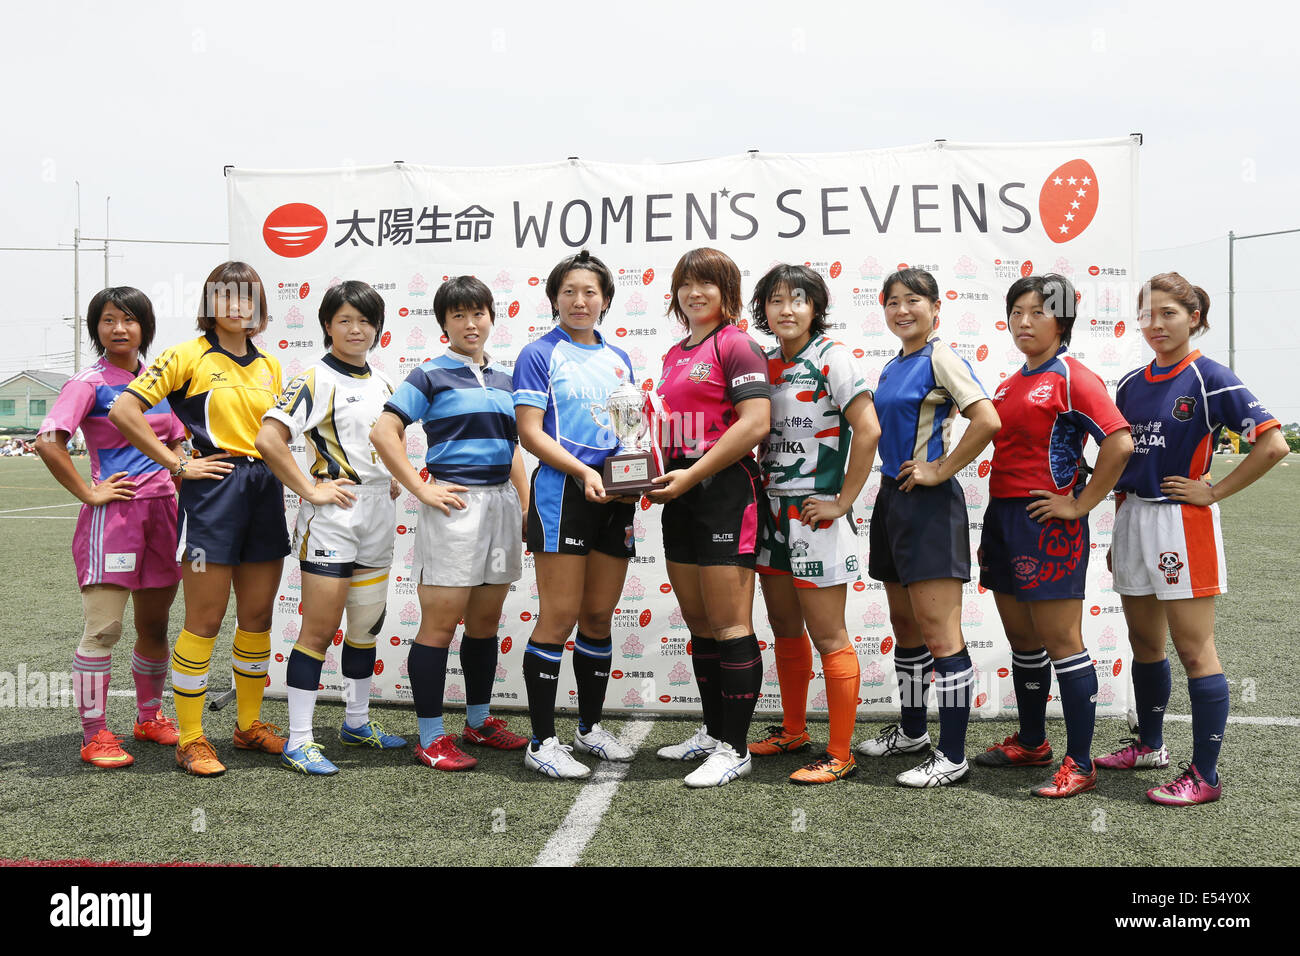 Kanagawa, Japan. 20th July, 2014. (L-R) Misaki Naka (Otemon-Univ), Ikumi Suzuki (TKM), Yumeno Hiratsuka (GRACE), Yui Higuchi (Nittai-Univ), Aya Takeuchi (ARUKAS), Akari Fujisaki (Rugirl-7), Chiharu Nakamura (Phoenix), Keiko Kato (Setagaya), Moemi Goto (Nagoya), Sakura Muto (Kanagawa) Rugby : Women's Sevens Series 2014 Yokohama at YCAC ground in Kanagawa, Japan . Credit:  Shingo Ito/AFLO SPORT/Alamy Live News Stock Photo